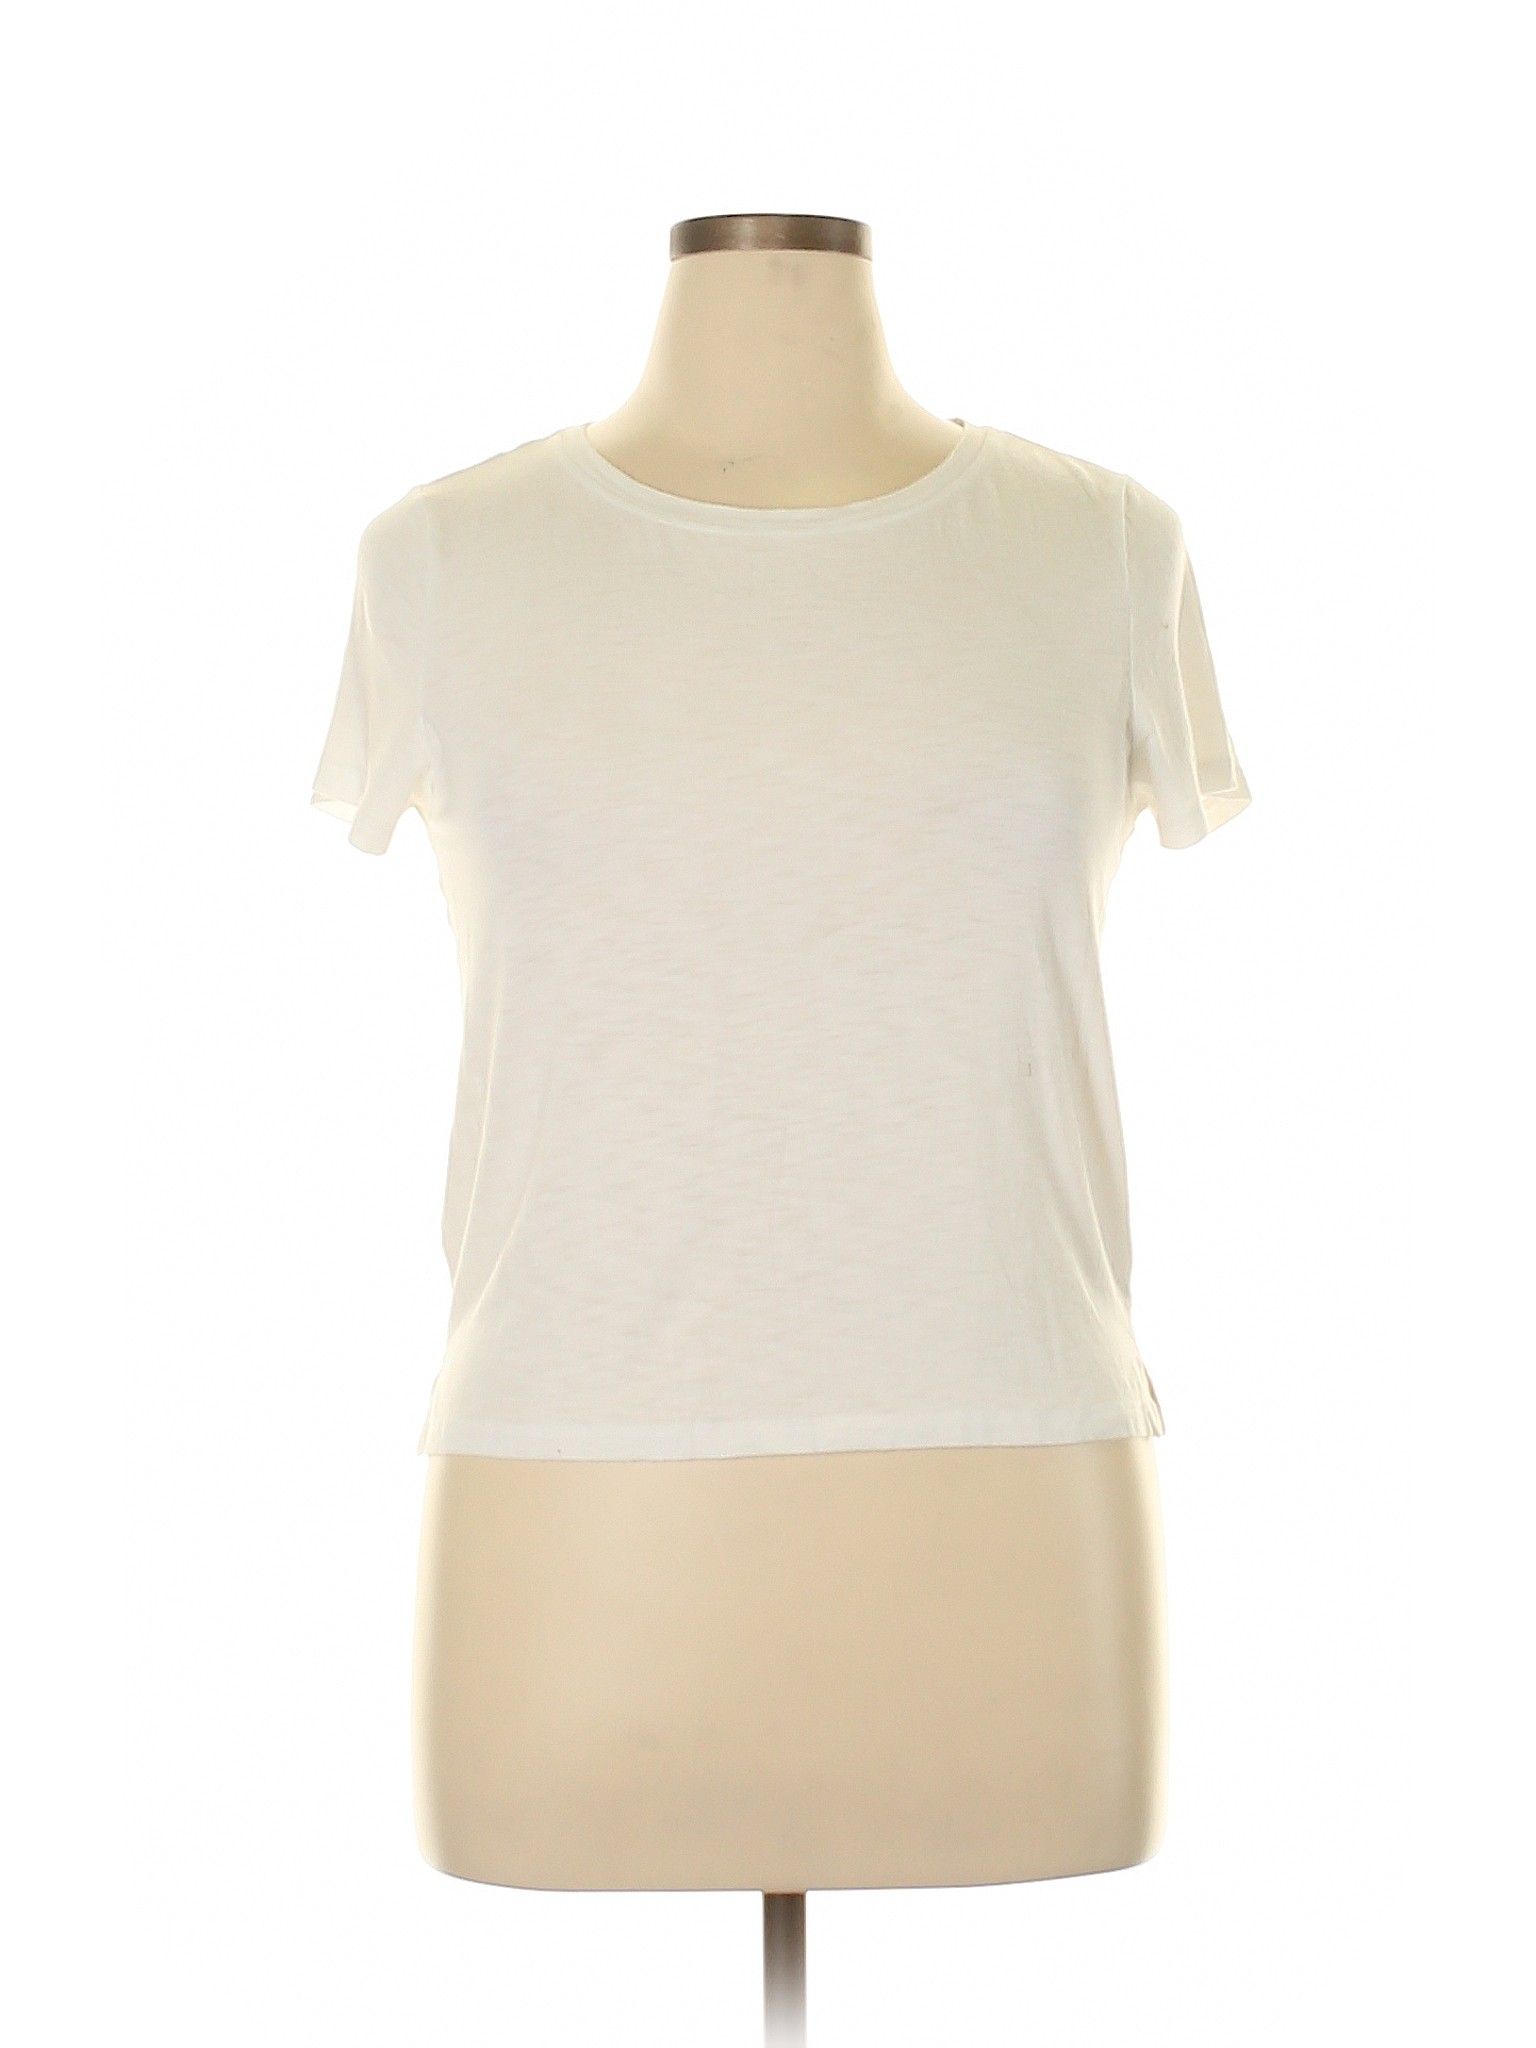 Aerie Short Sleeve T Shirt Size 15: White Junior Tops - 41067040 | thredUP